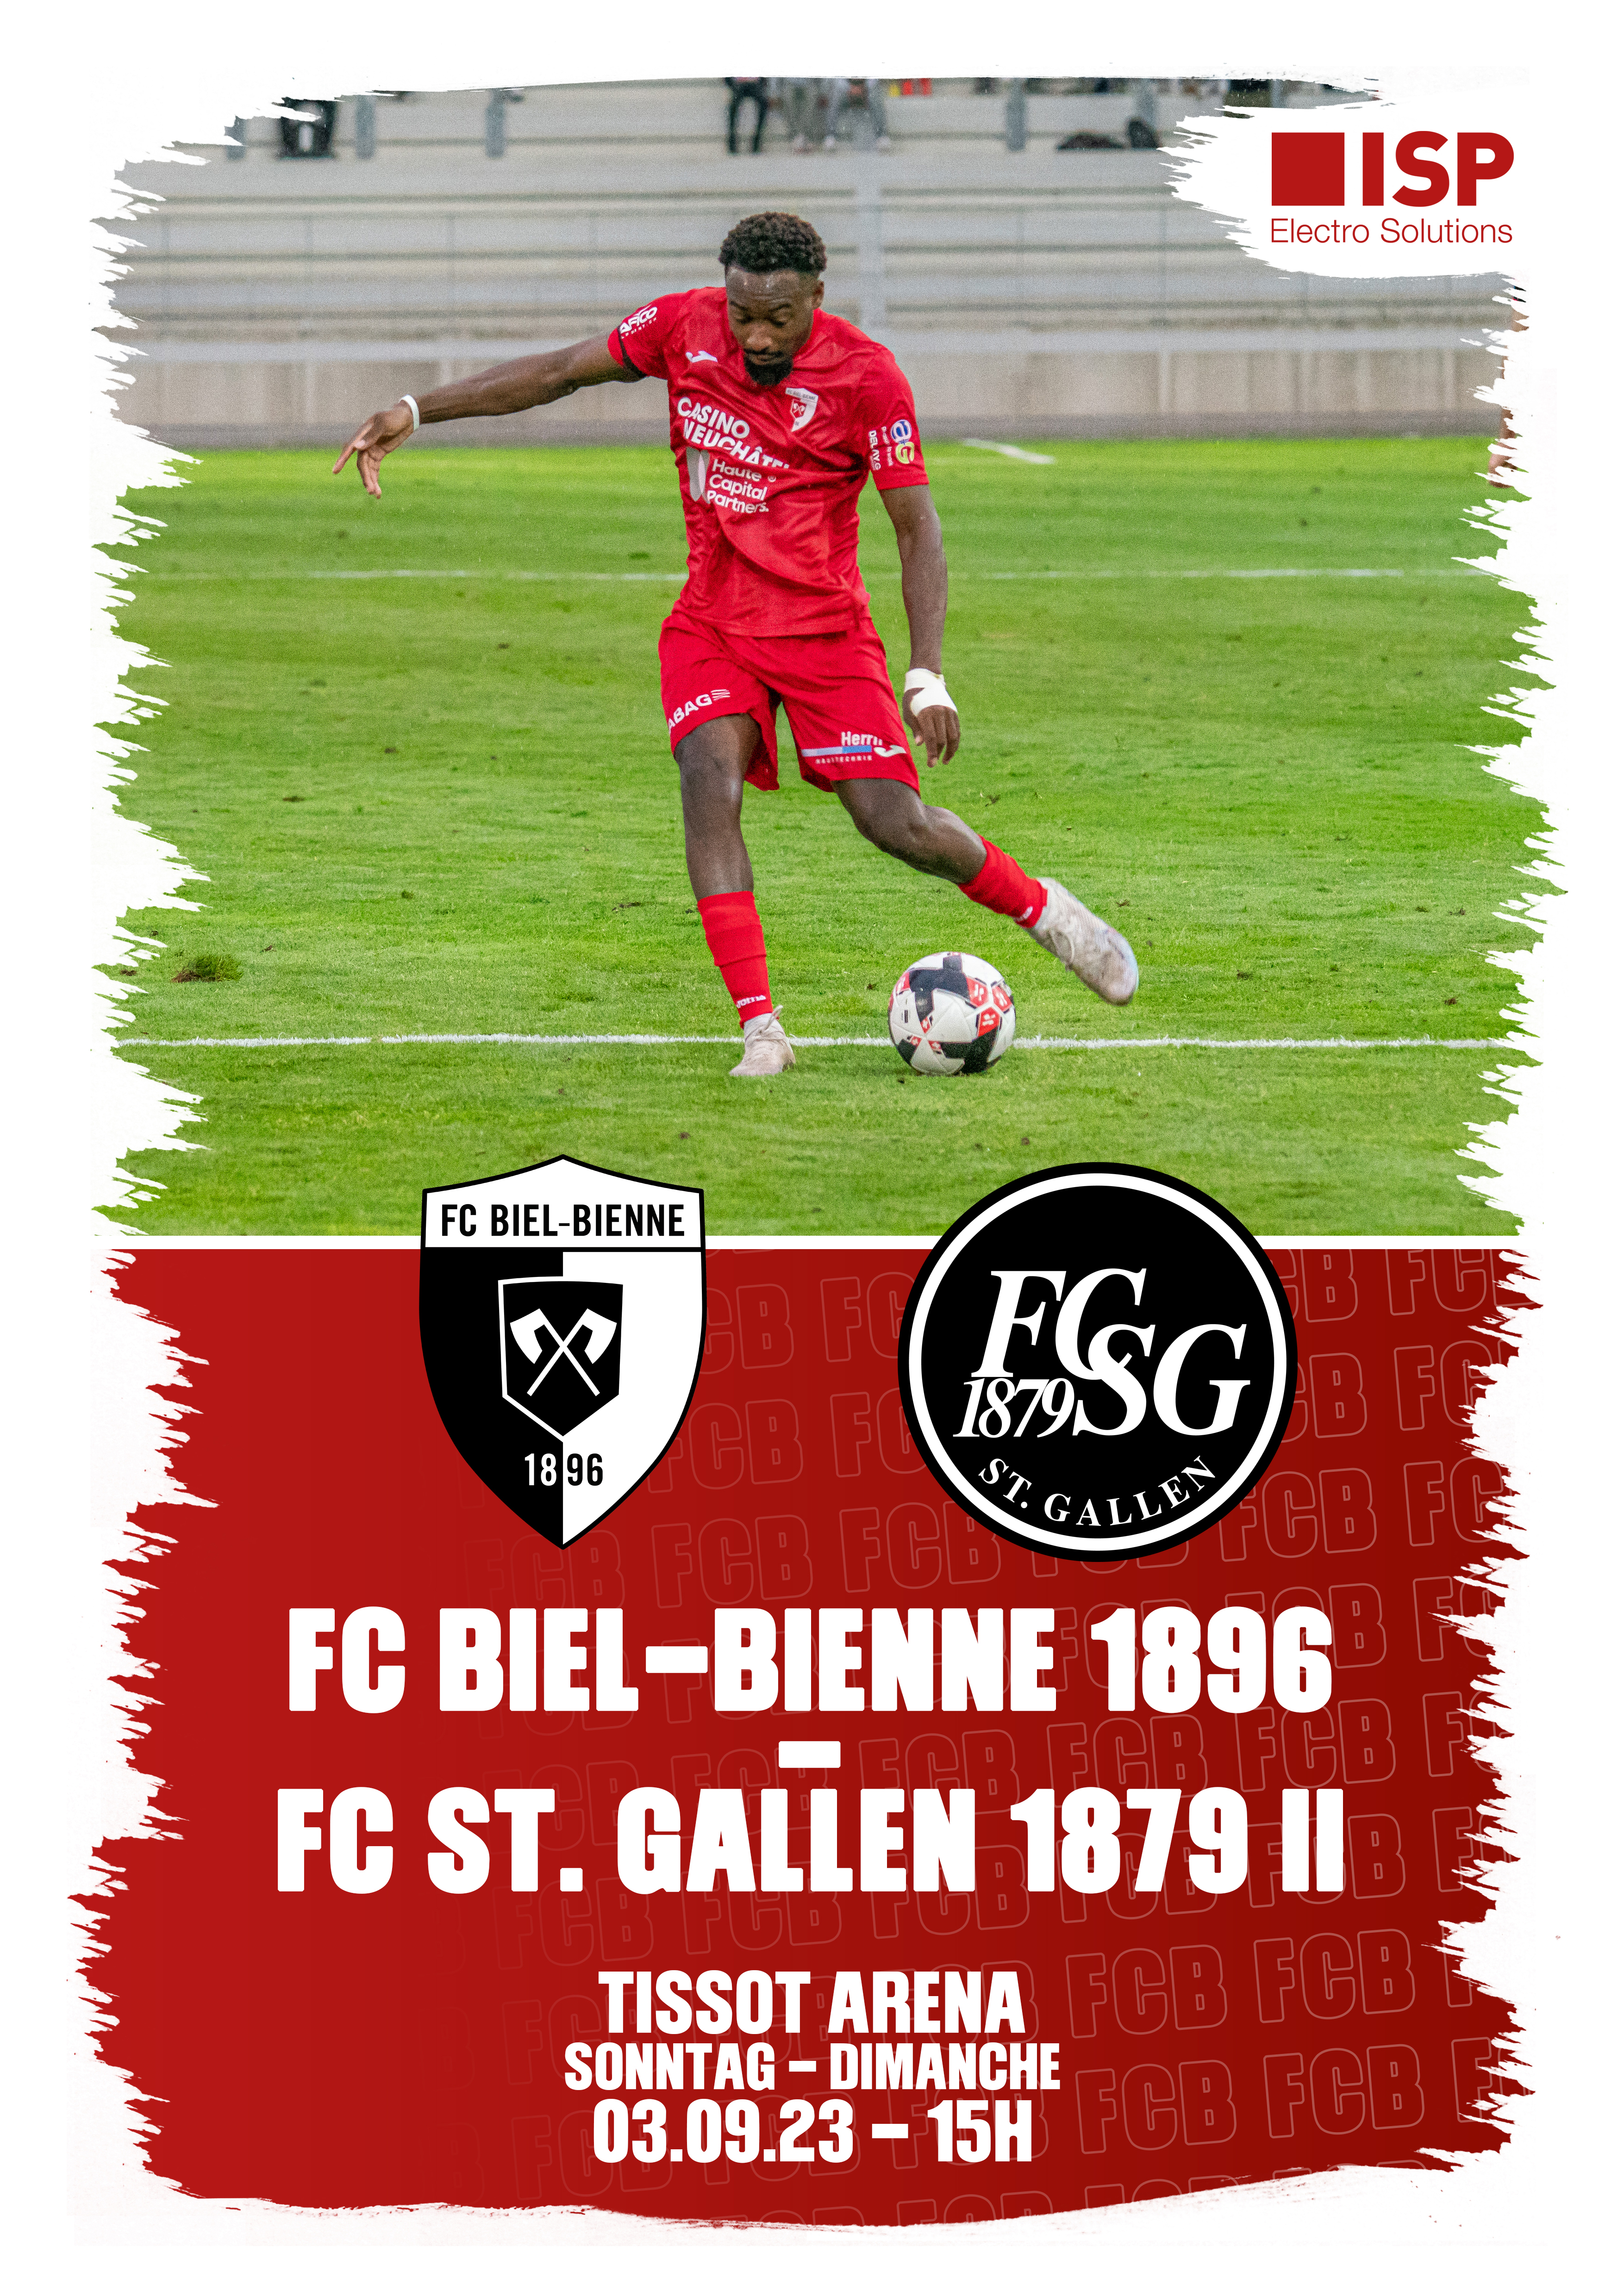 Cordiale bienvenue au FC St-Gall 1879 II